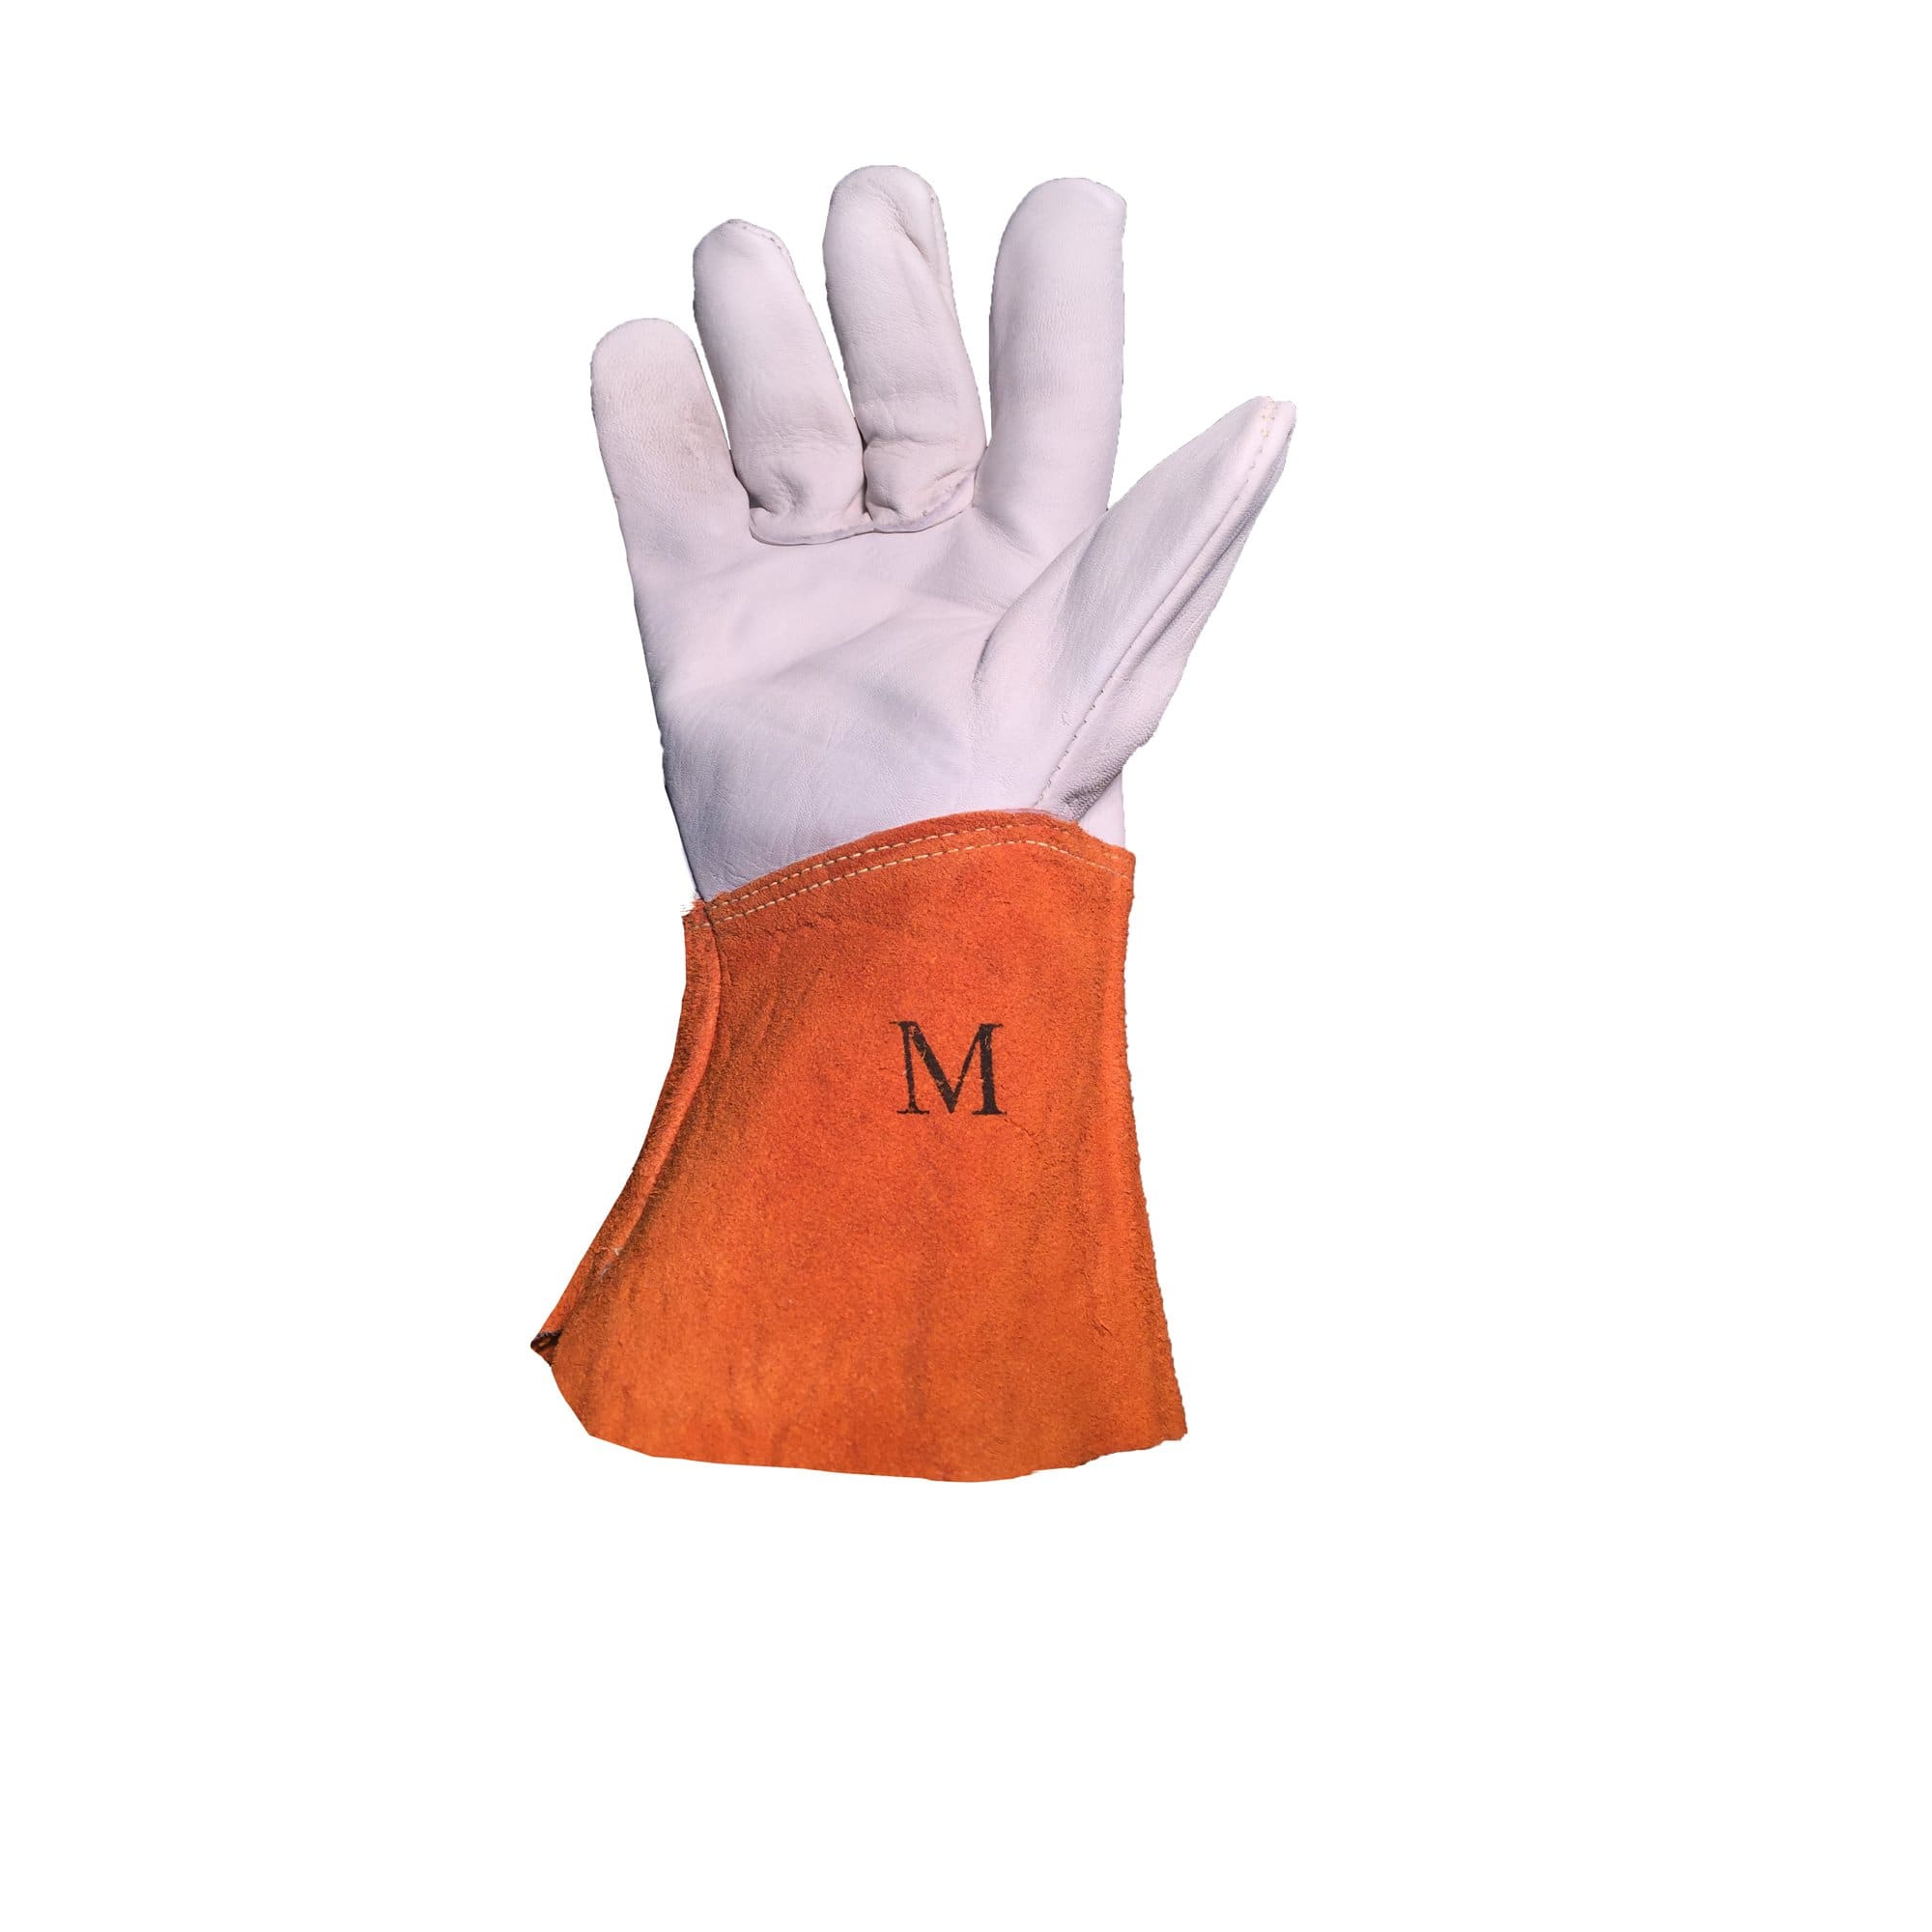 leather work gloves - leather light duty work gloves - fruit picking gloves